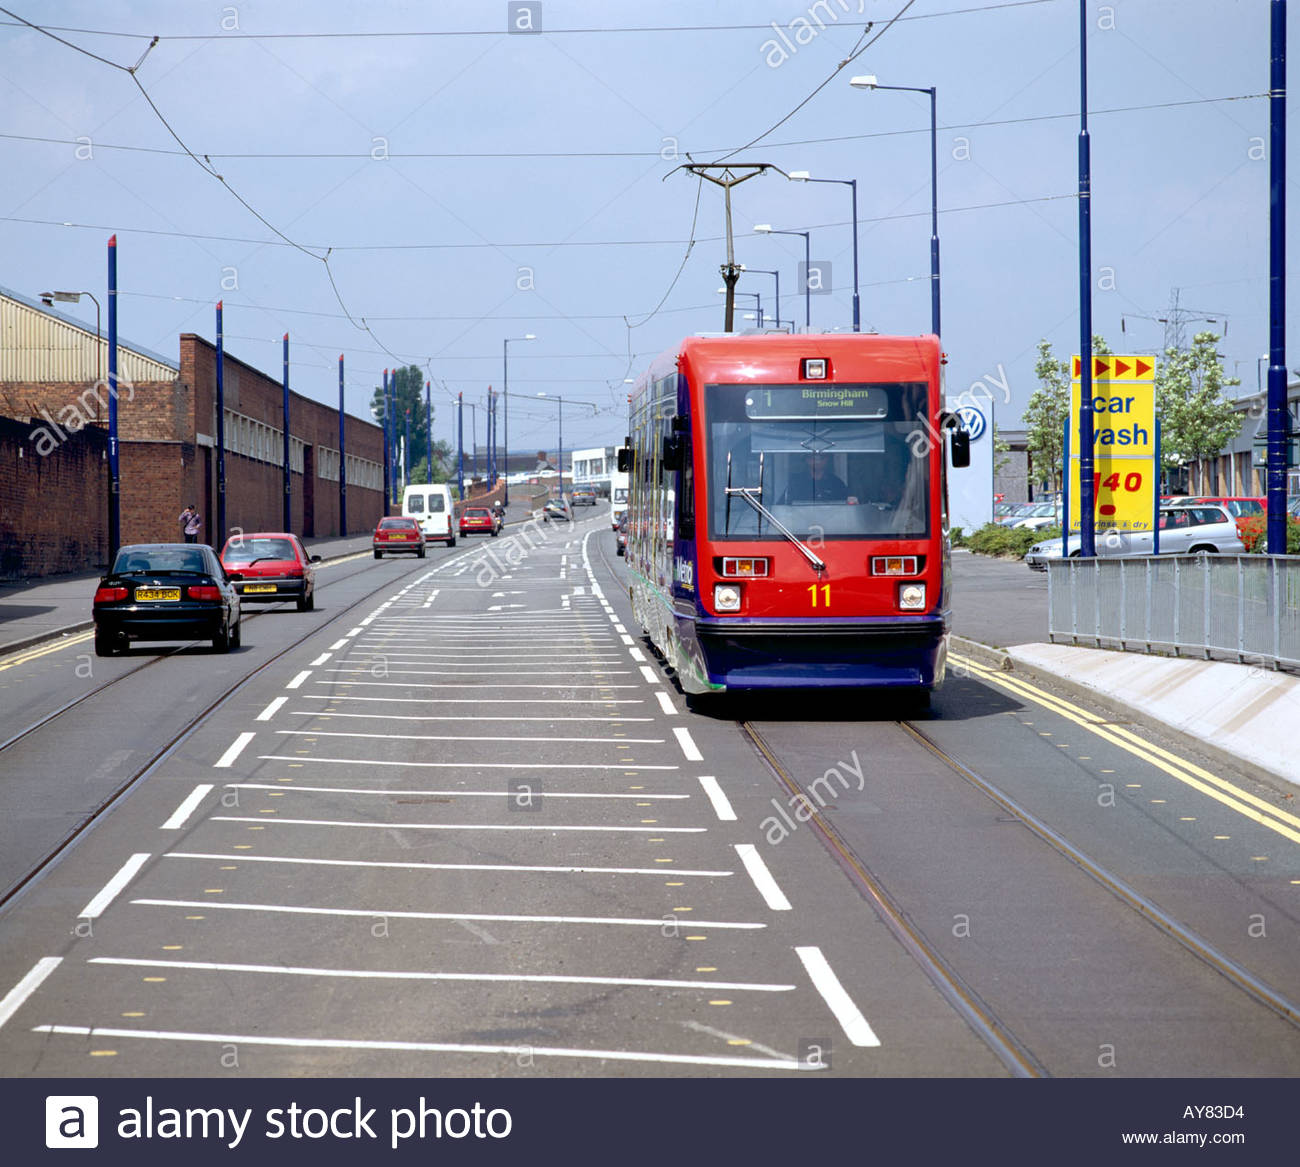 west-midlands-metro-tram-bilston-road-wolverhampton-uk-AY83D4.jpg